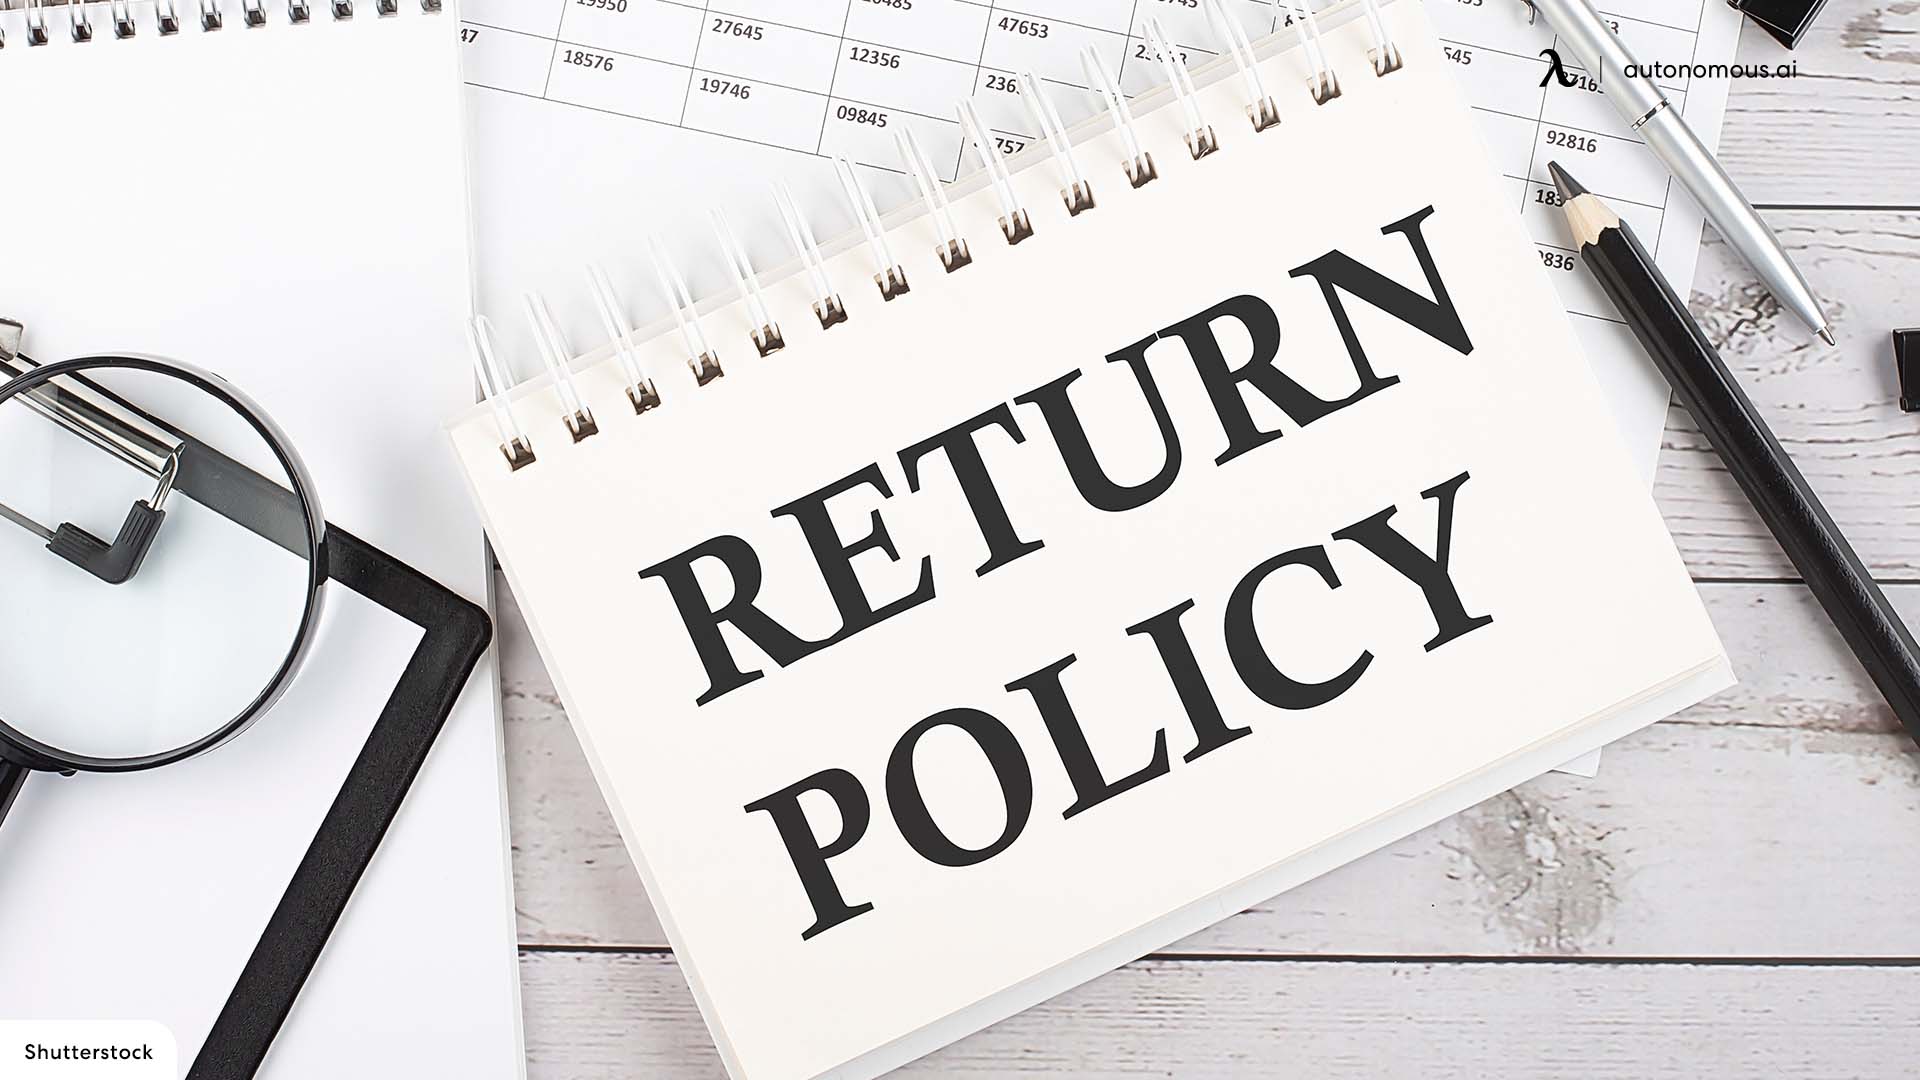 return policy